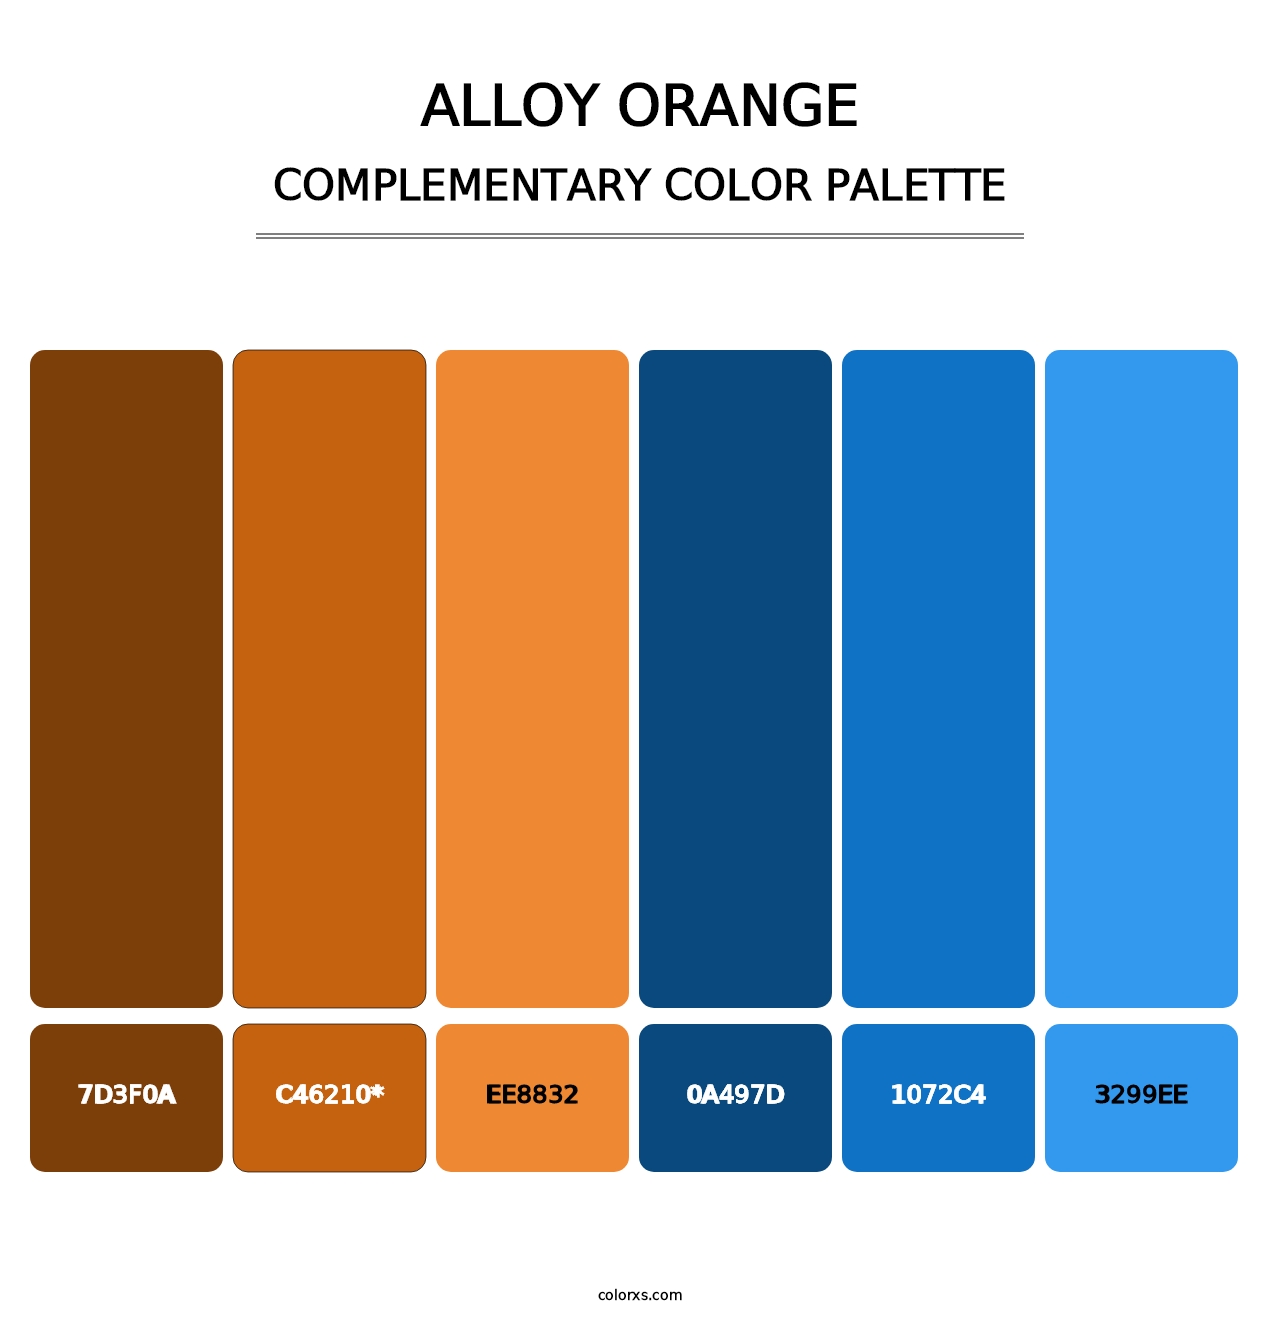 Alloy Orange - Complementary Color Palette